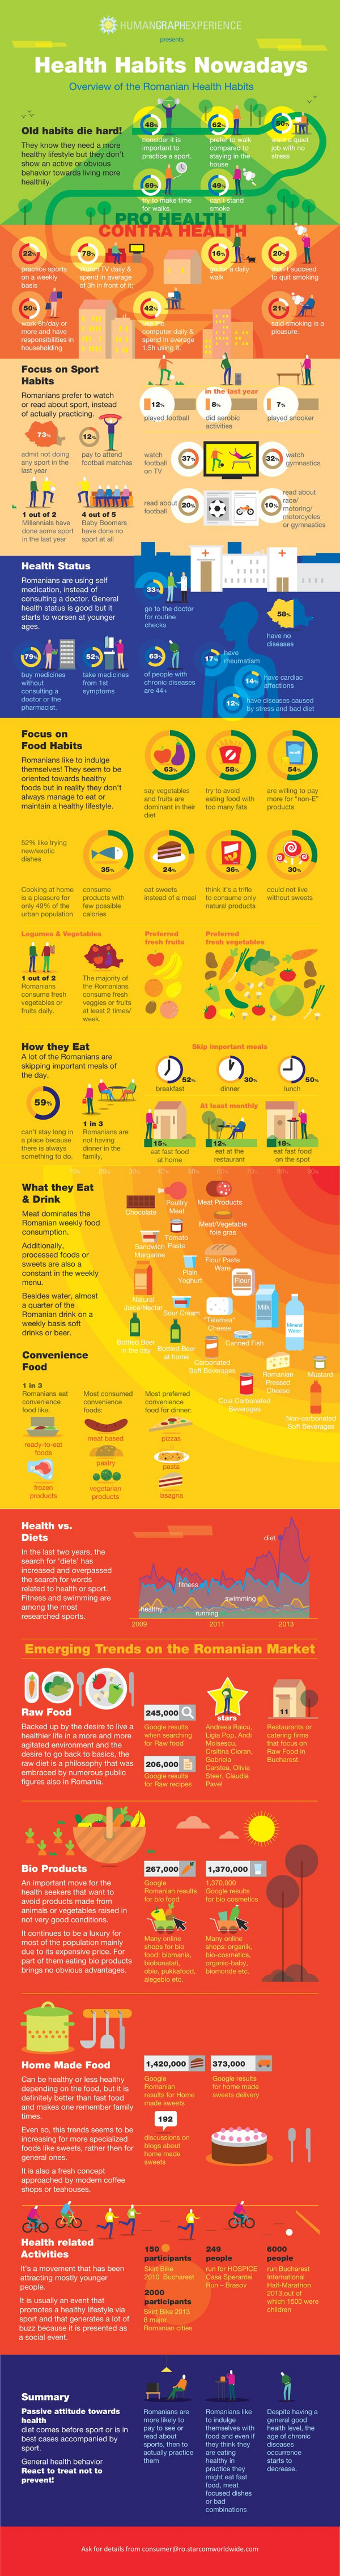 Health Habits Nowadays infographic